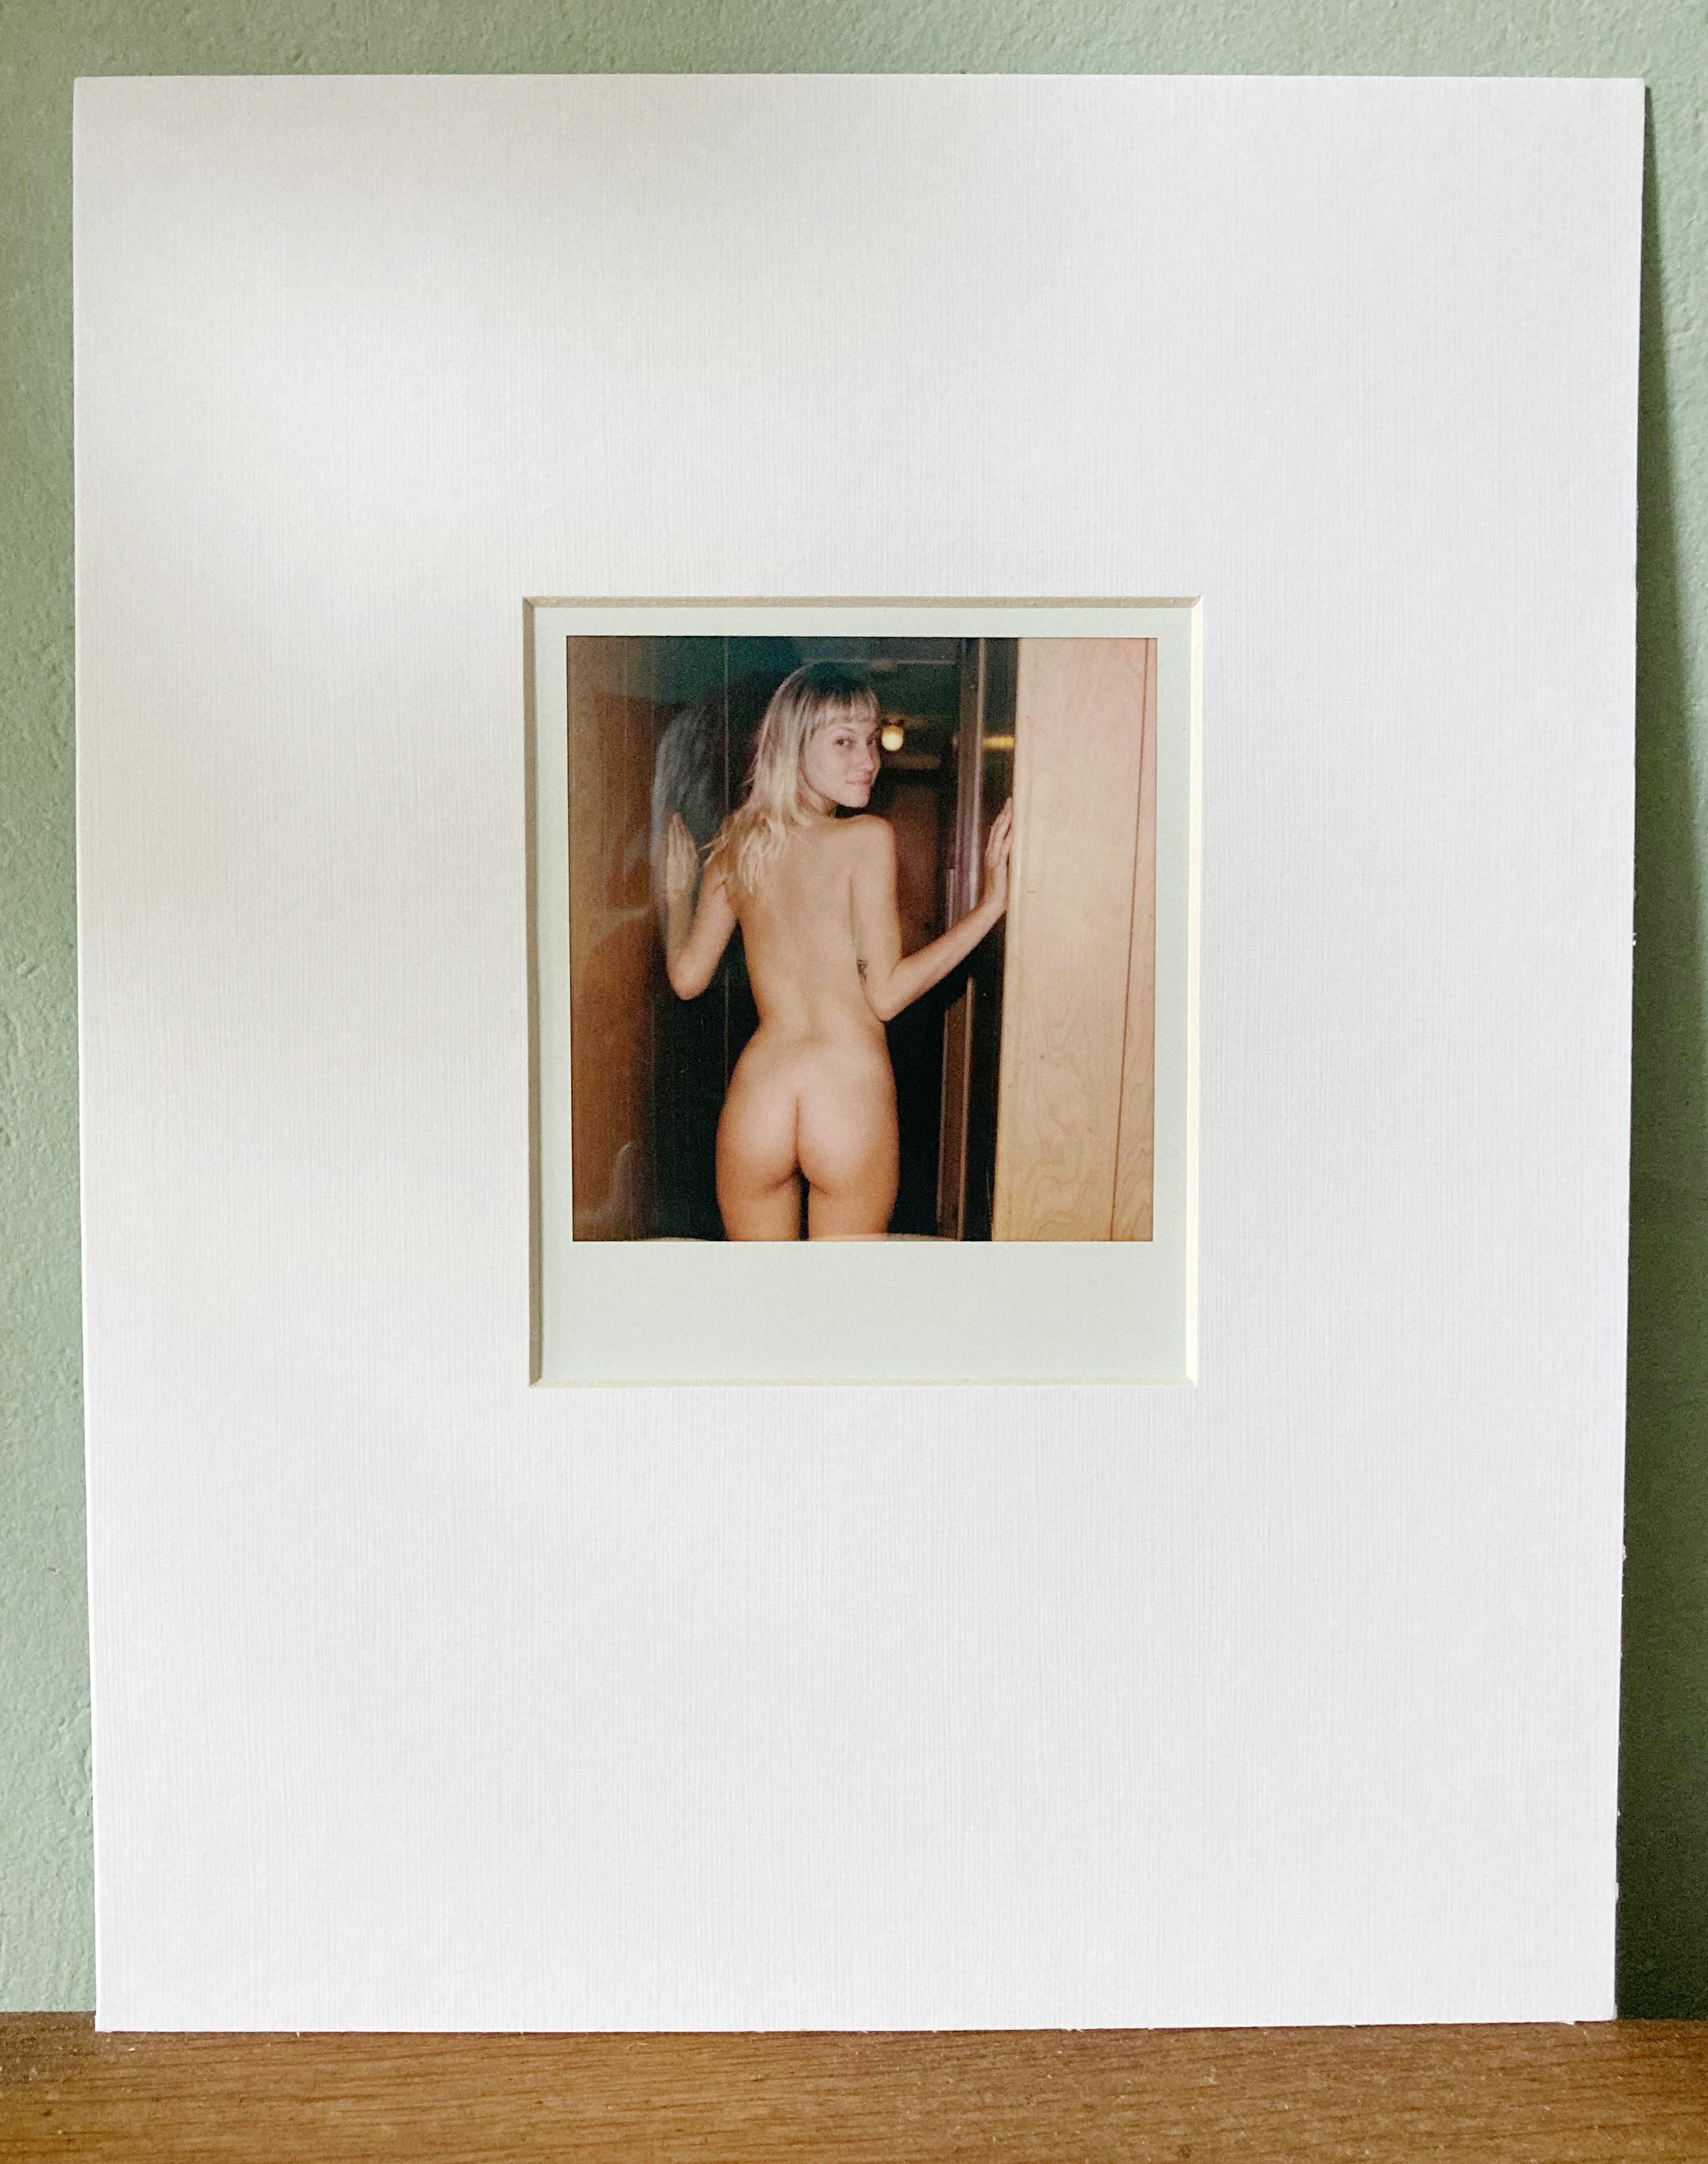 Kirsten Thys van den Audenaerde Nude Photograph - Come on - Original Polaroid - Unique Piece